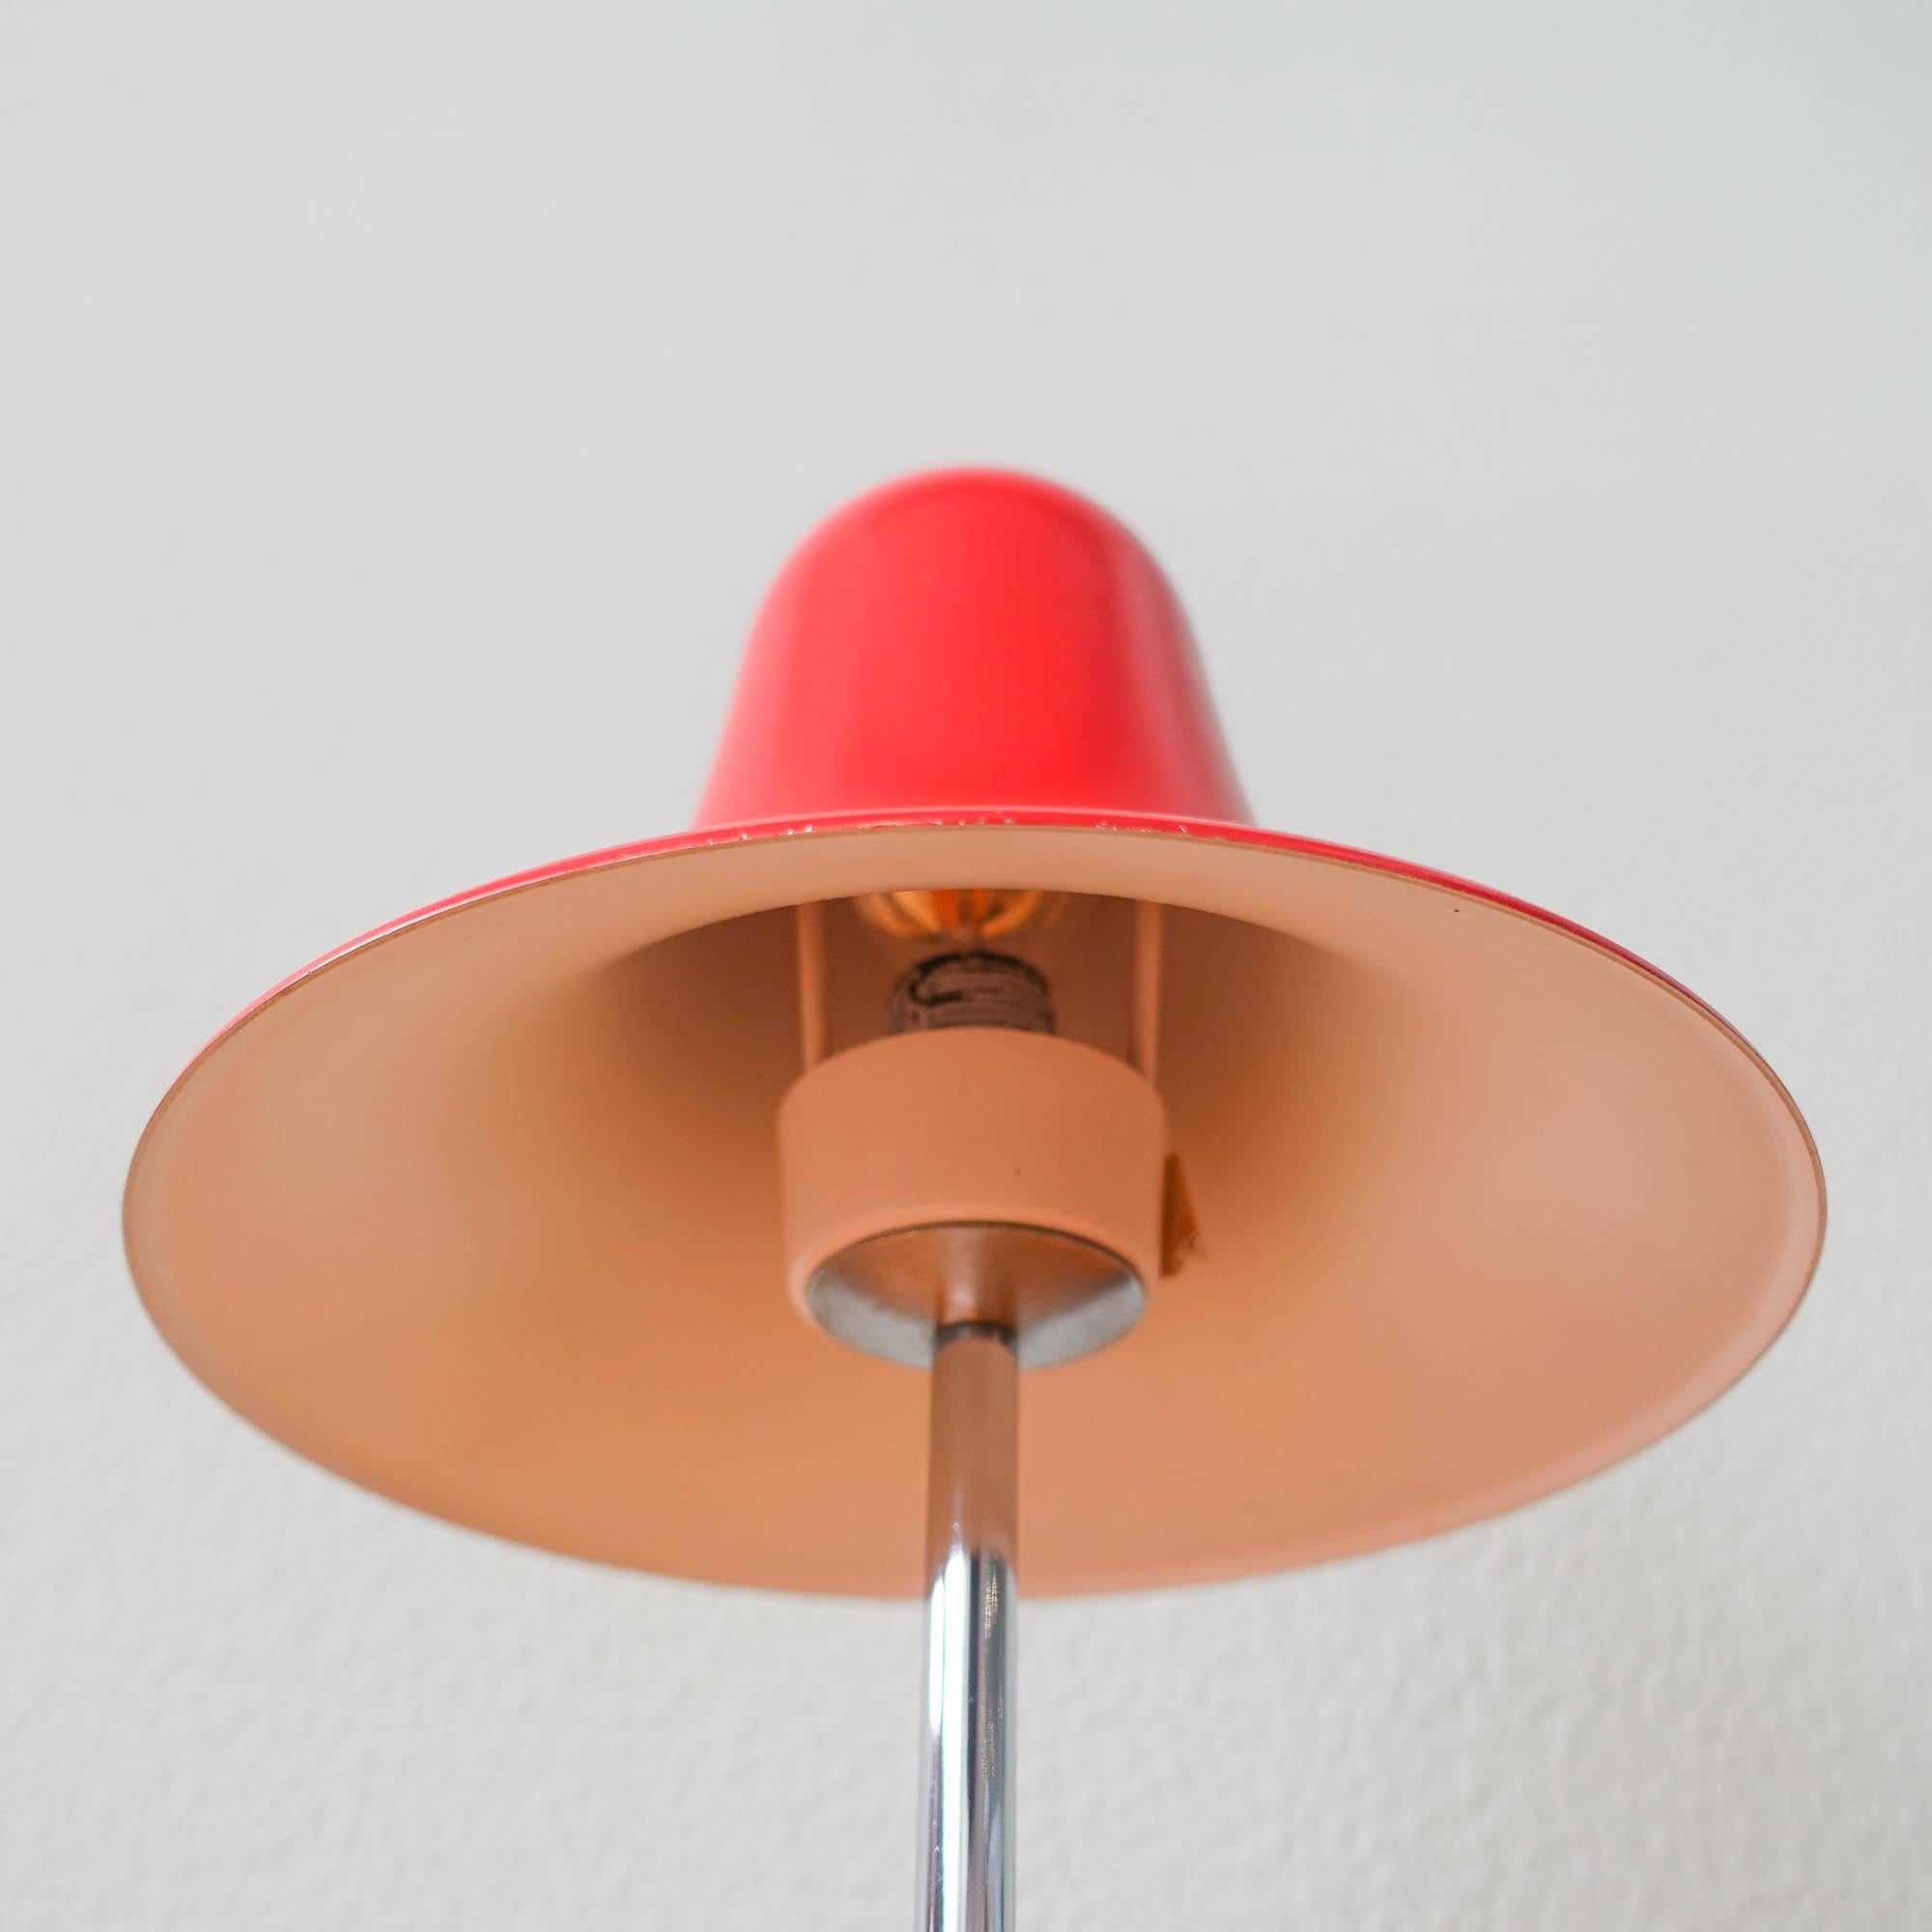 Pantop D Table Lamp by Verner Panton for Elteva Danmark A/S 1